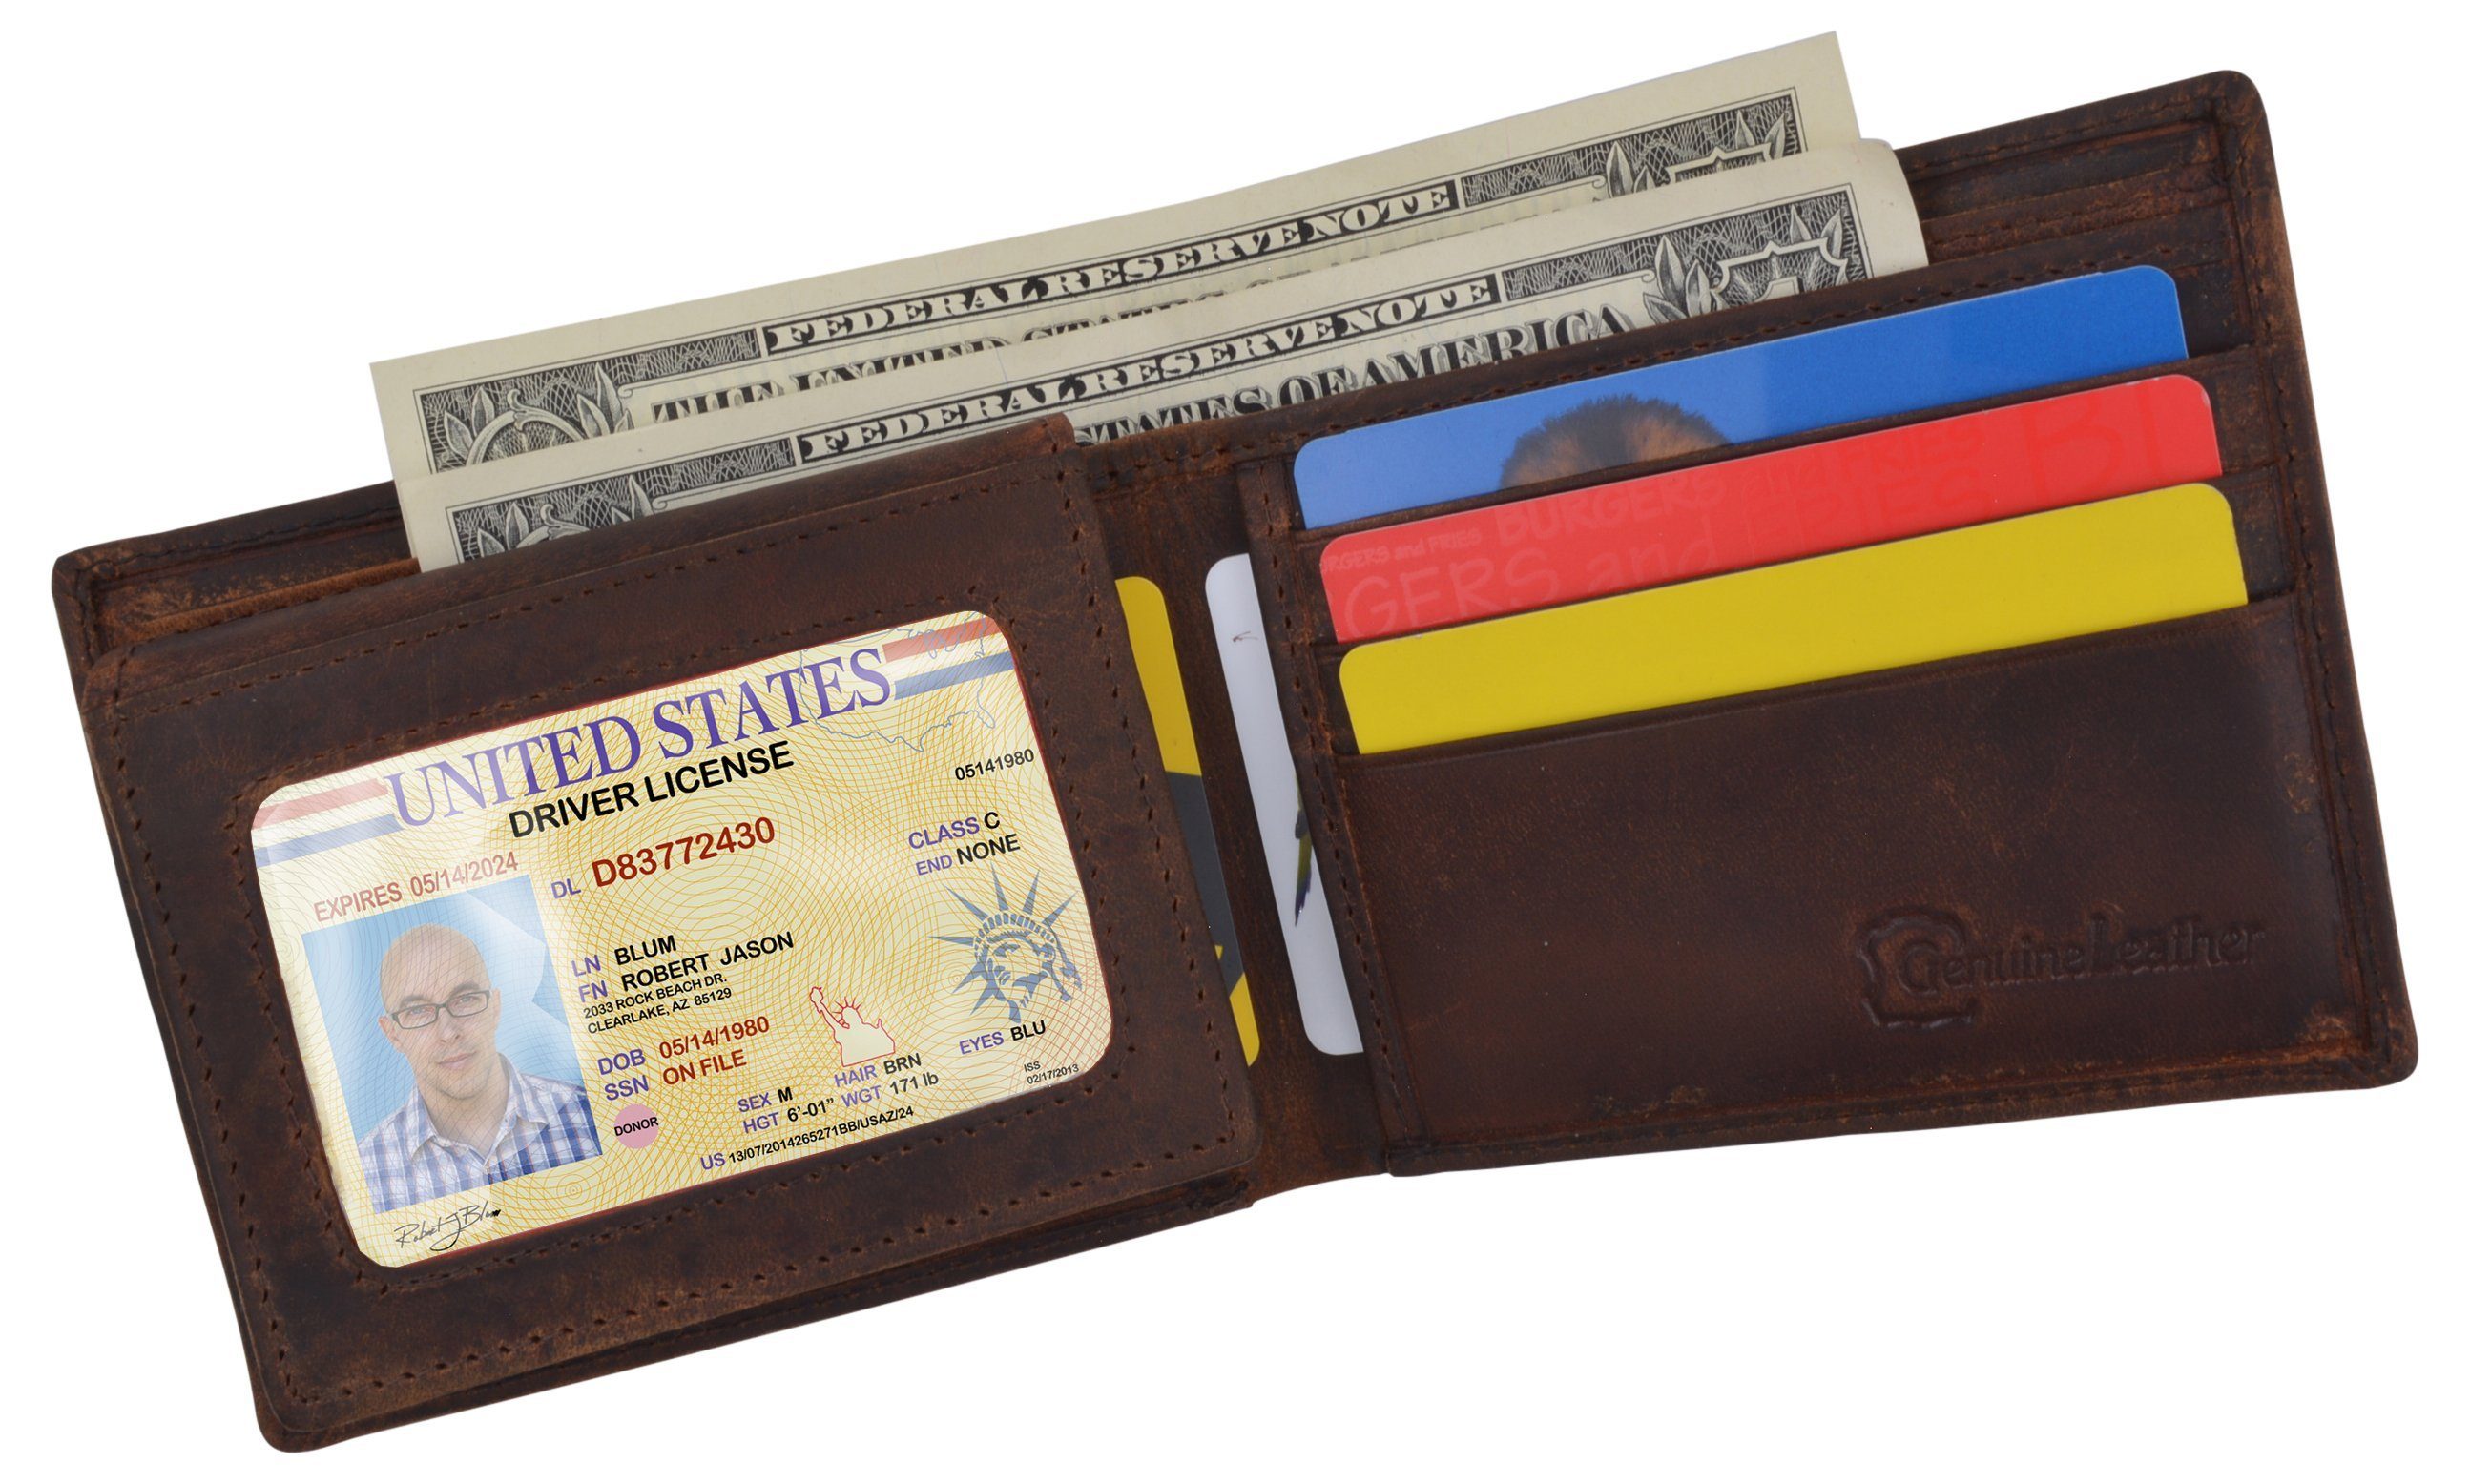  RFID Rustic Men Wallet-Horse Design Craft Stamp